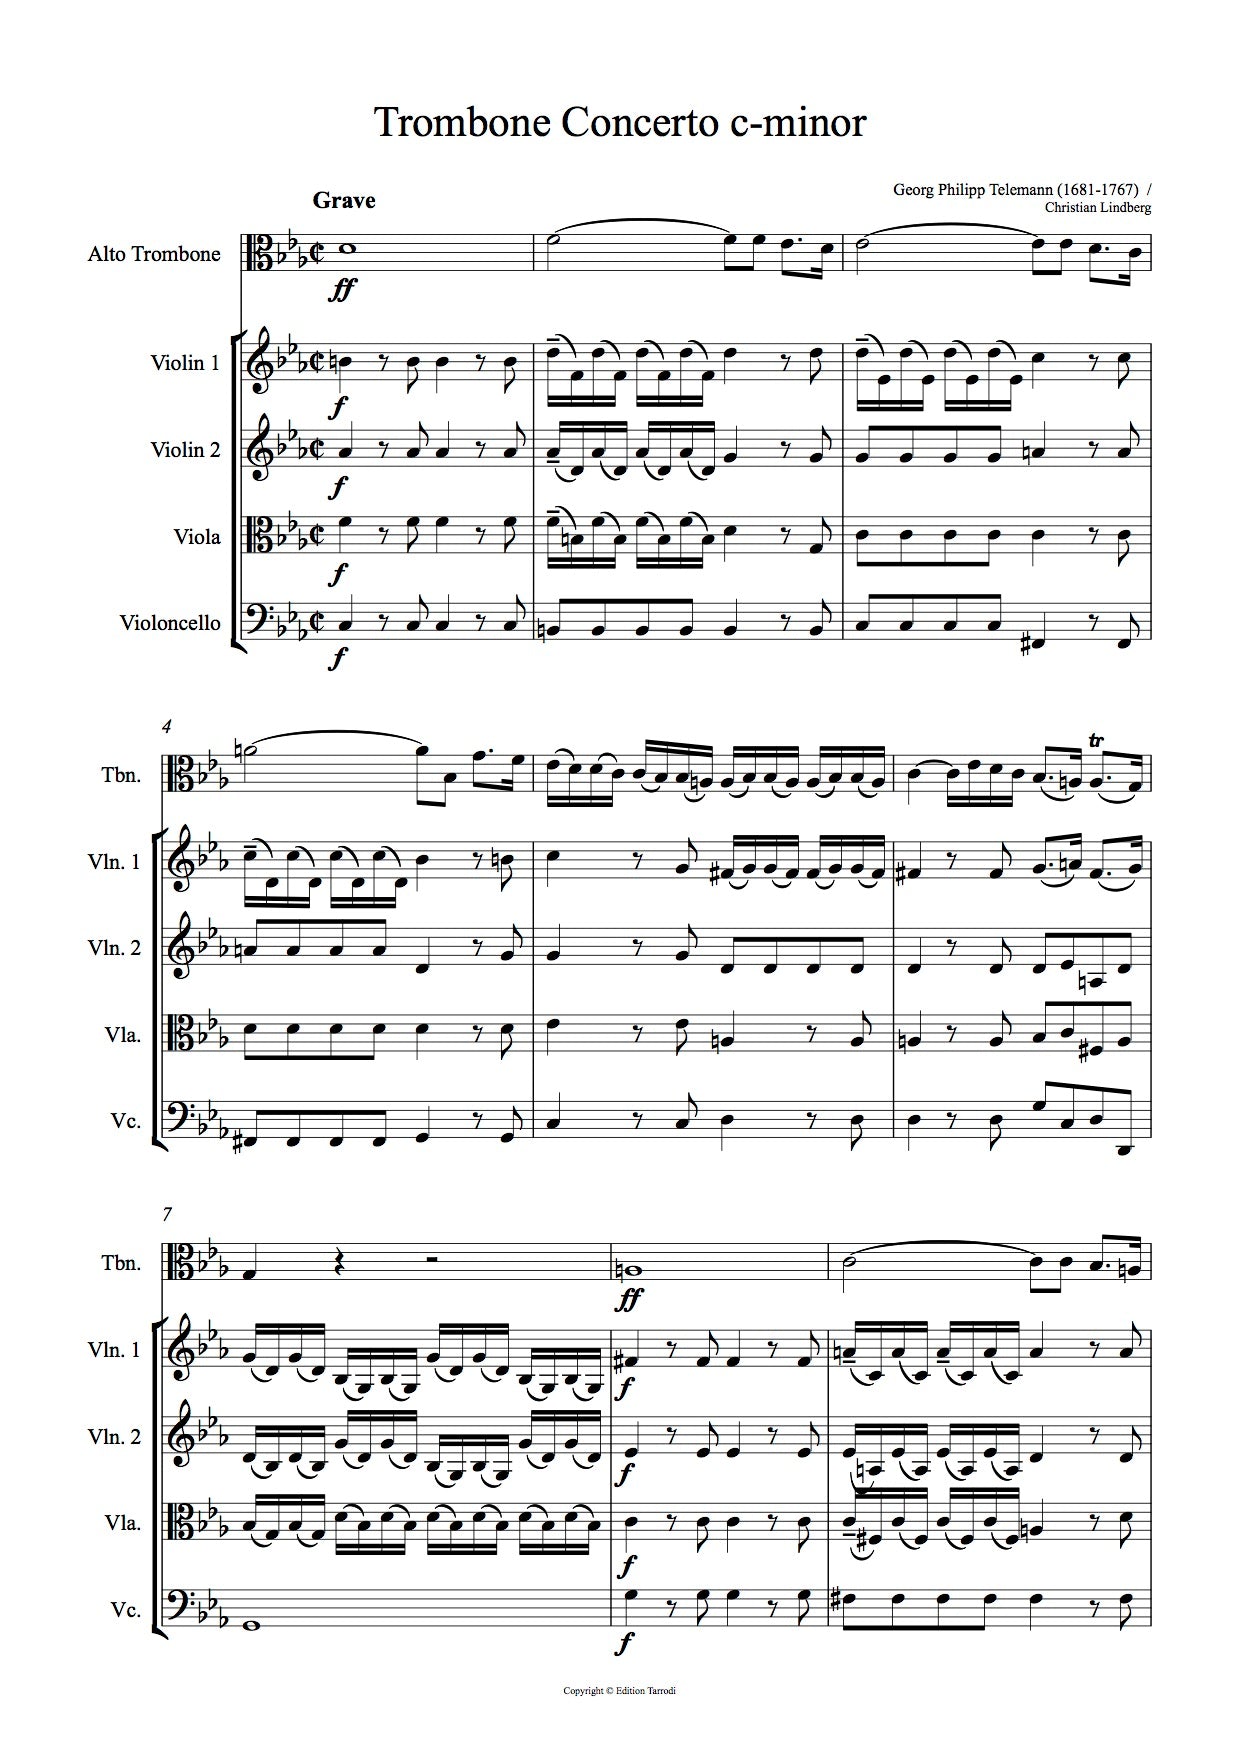 G. Ph Telemann:  Alto Trombone concerto c-minor